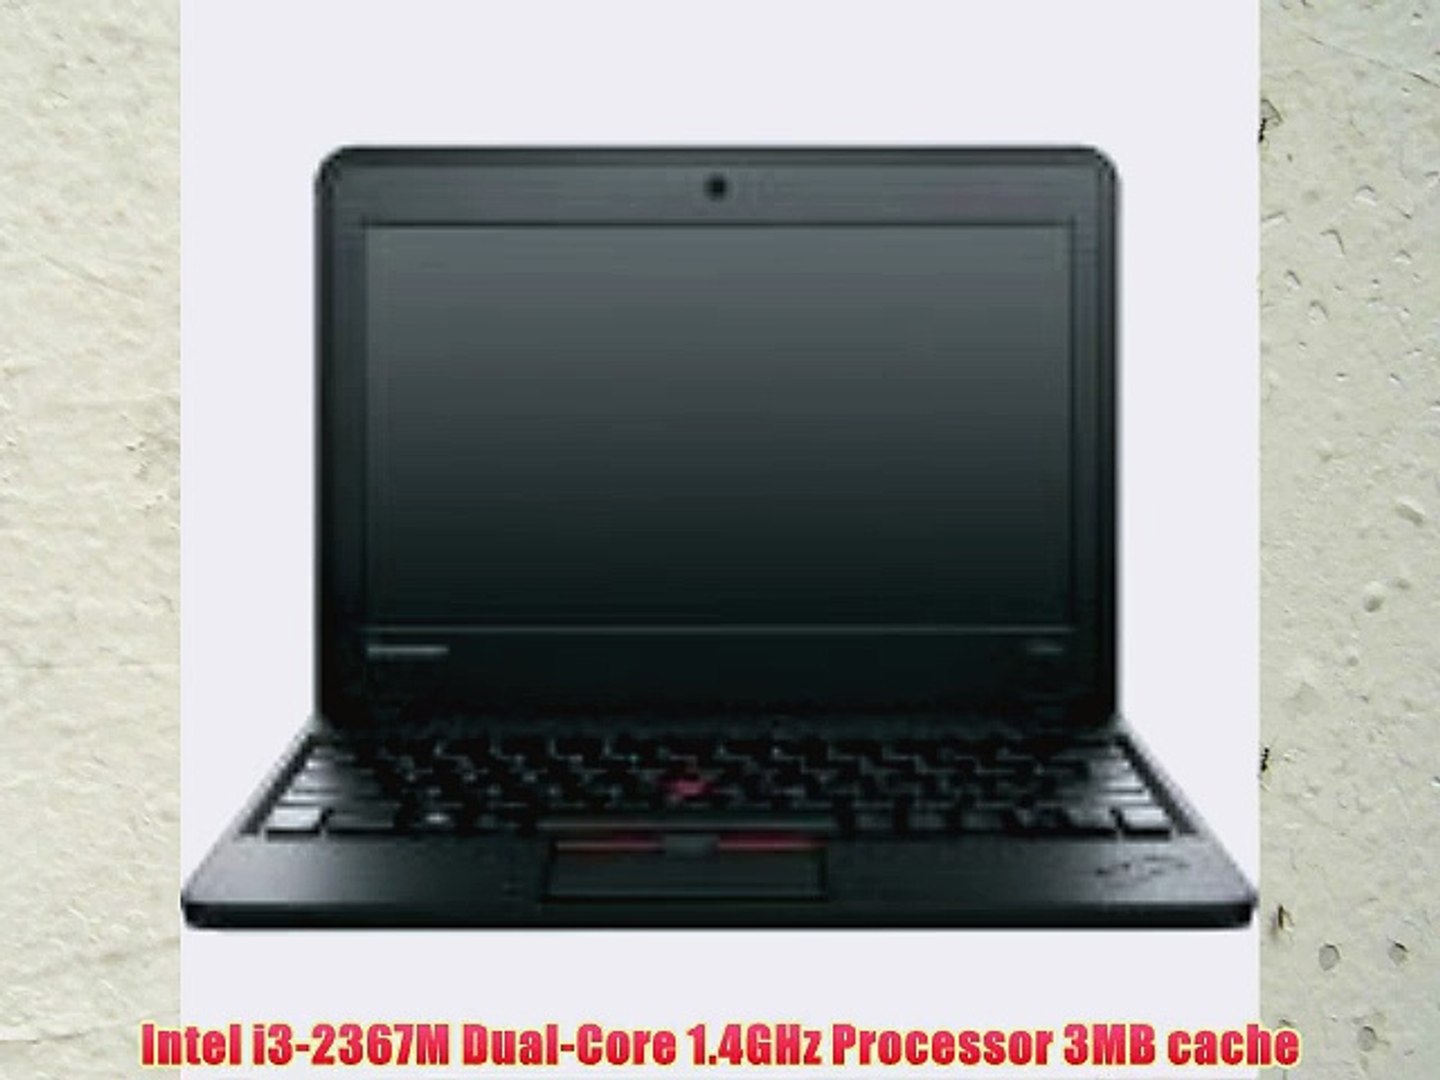 Lenovo ThinkPad X130e 2338 - 11.6 - Core i3 2367M - video Dailymotion